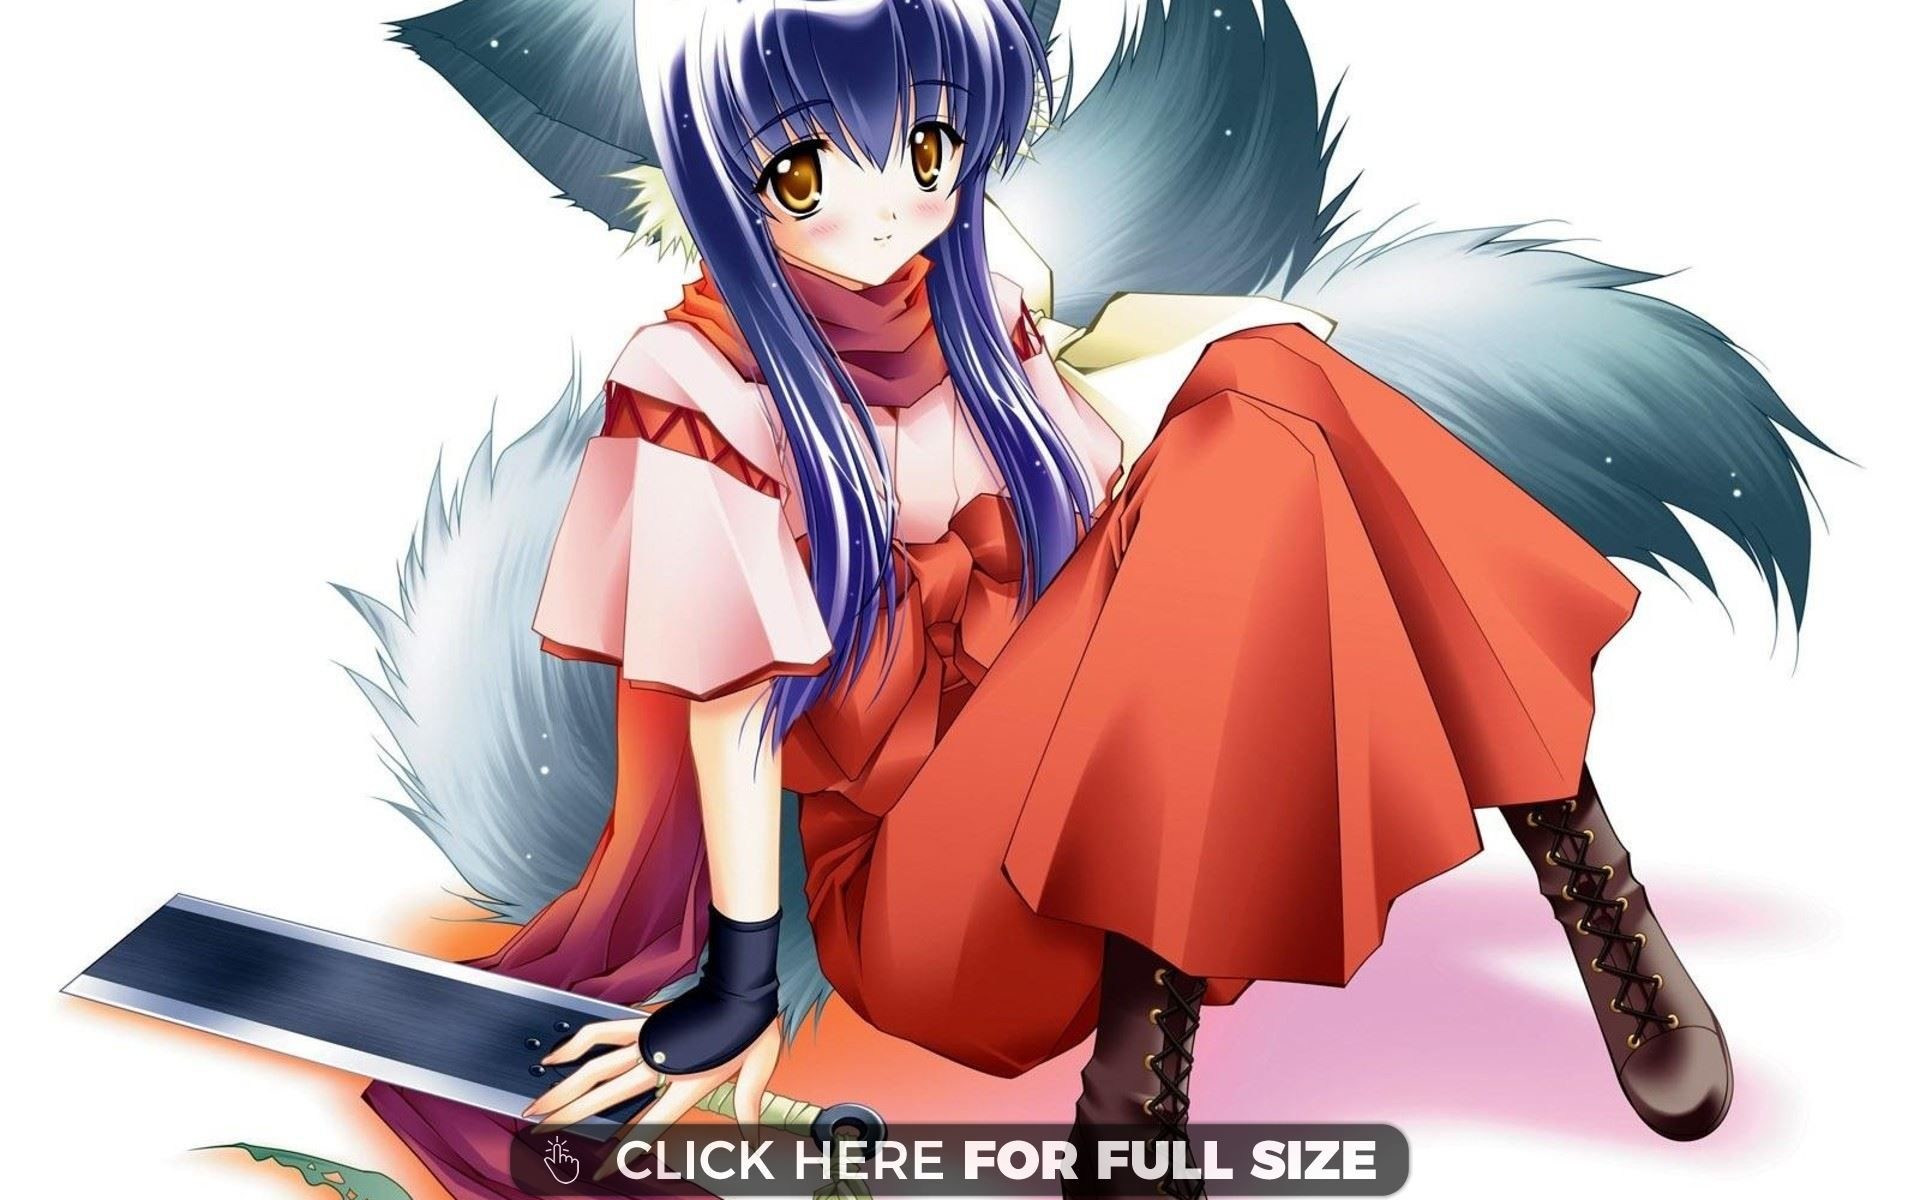 Materi Pelajaran 6 Anime Galaxy Wolf Girl